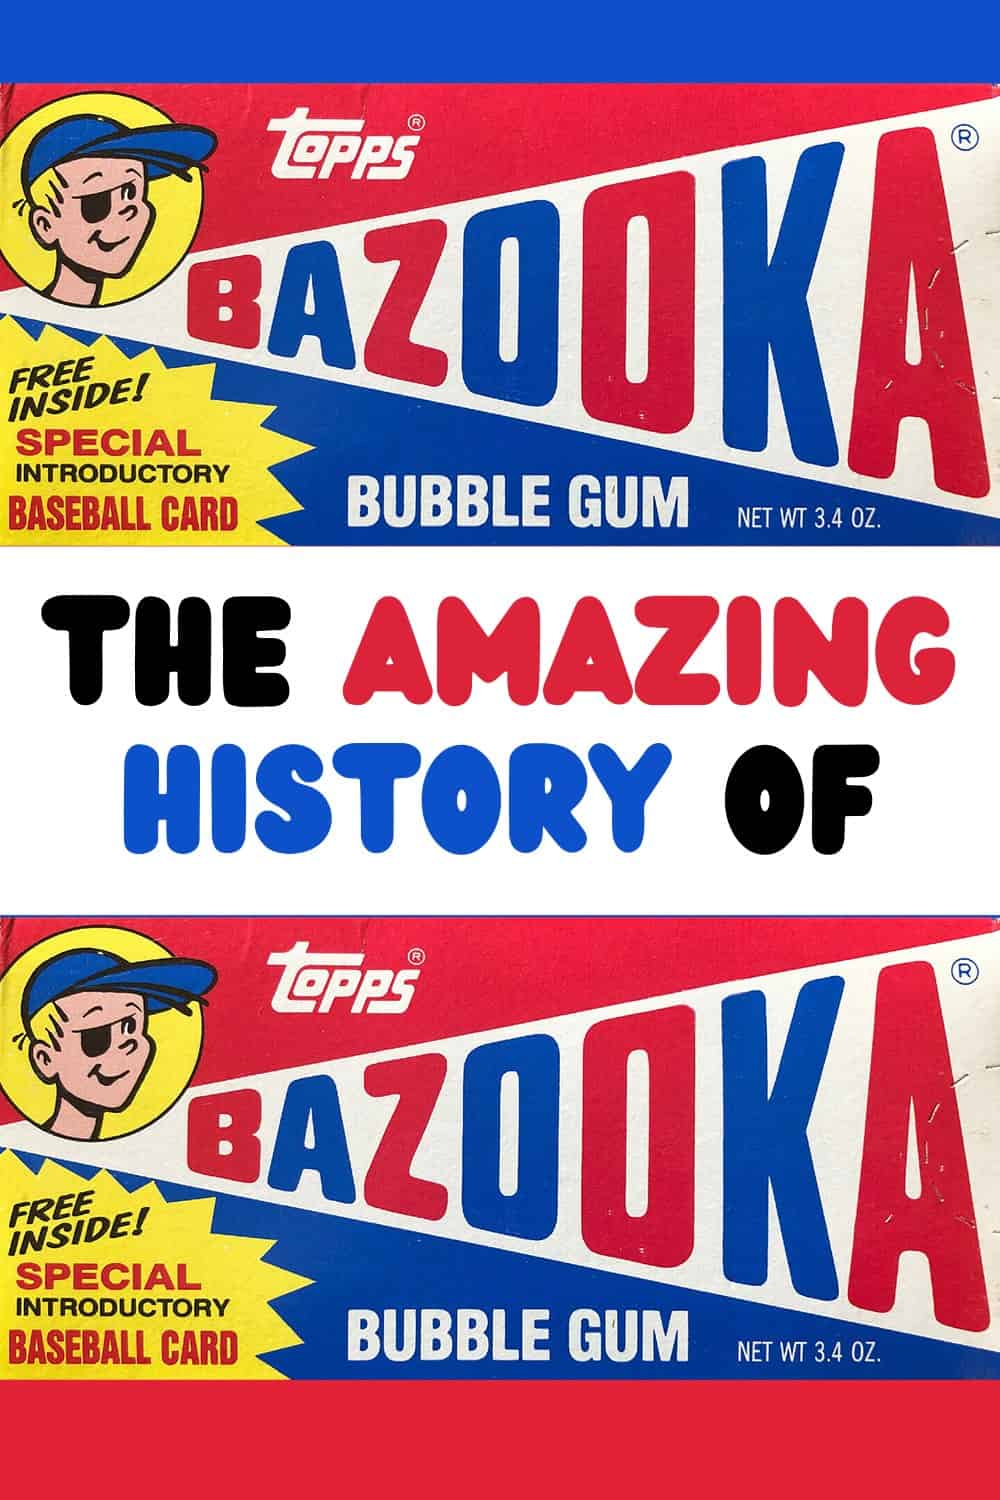 Bazooka Bubble Gum Started in 1947